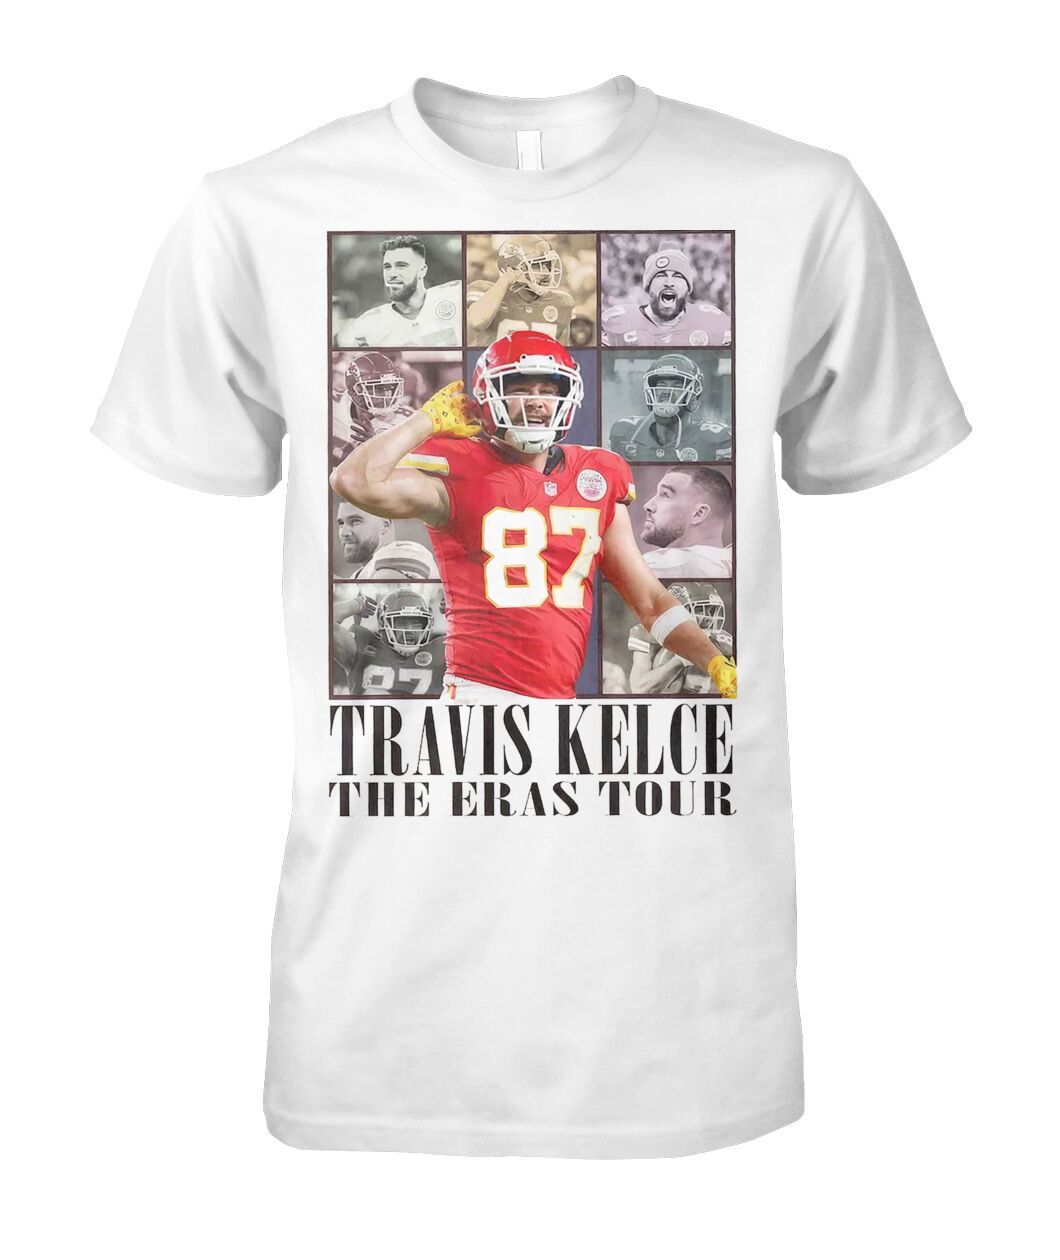 Springtee online — Travis Kelce The Eras Tour Shirt